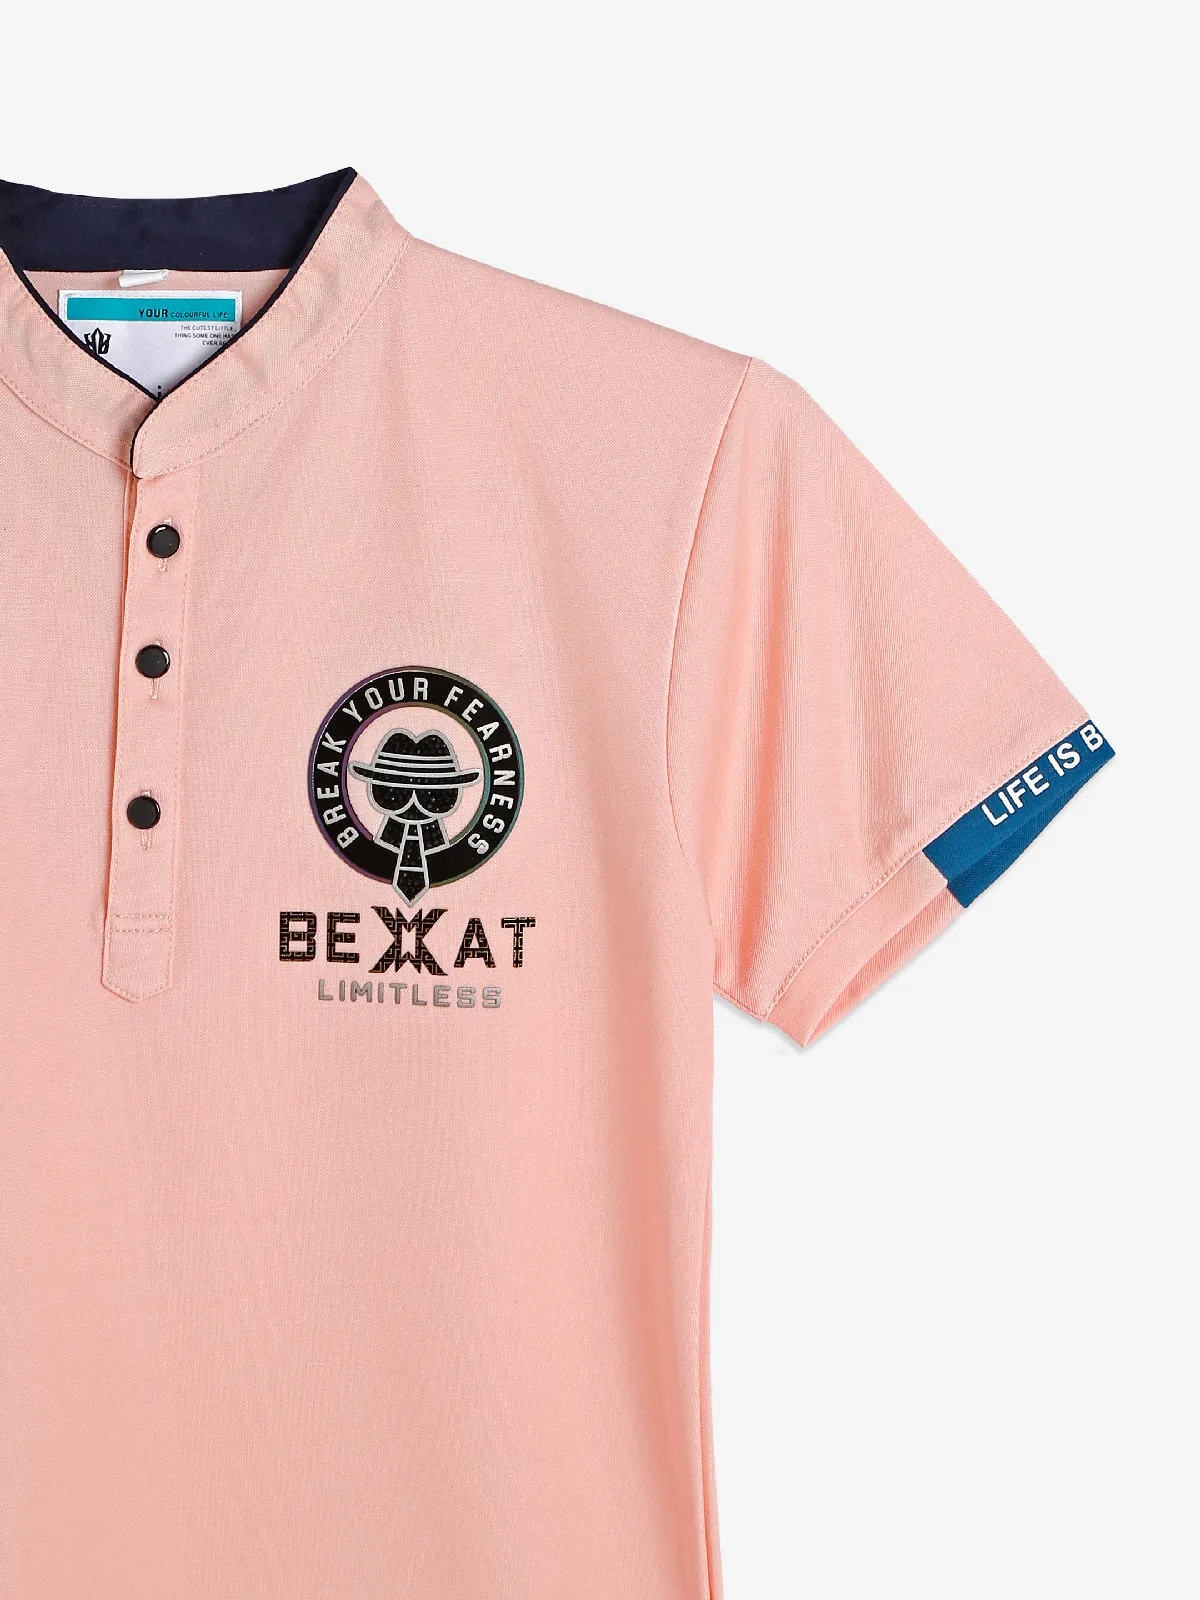 Bambini peach half sleeves t-shirt